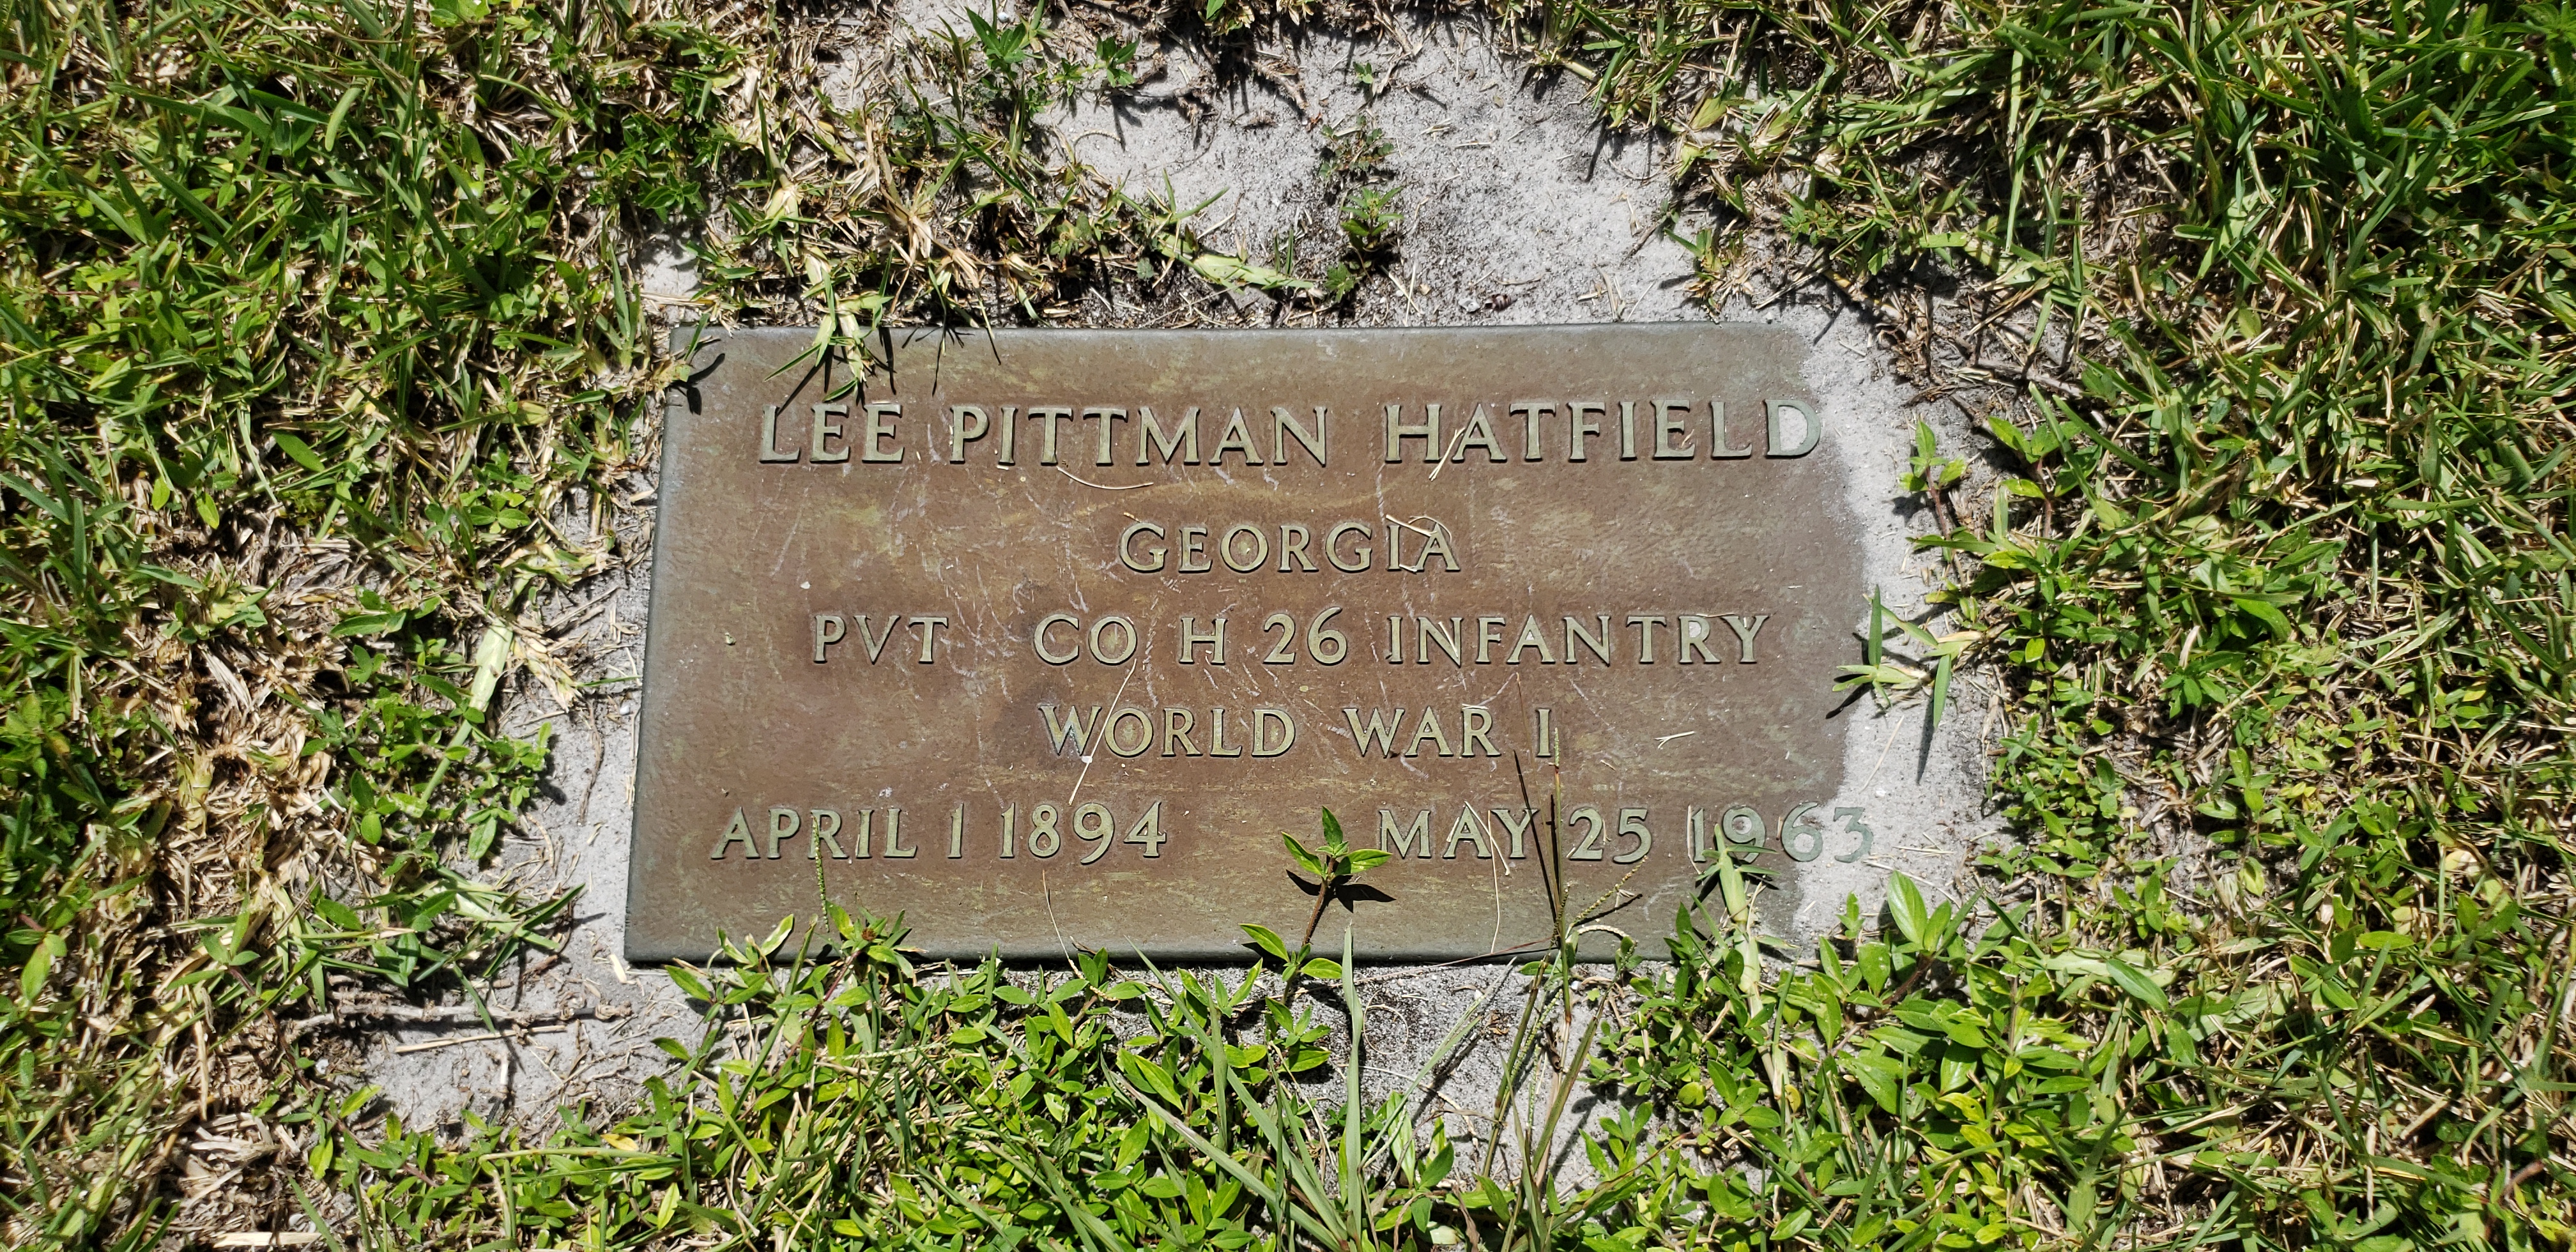 Lee Pittman Hatfield